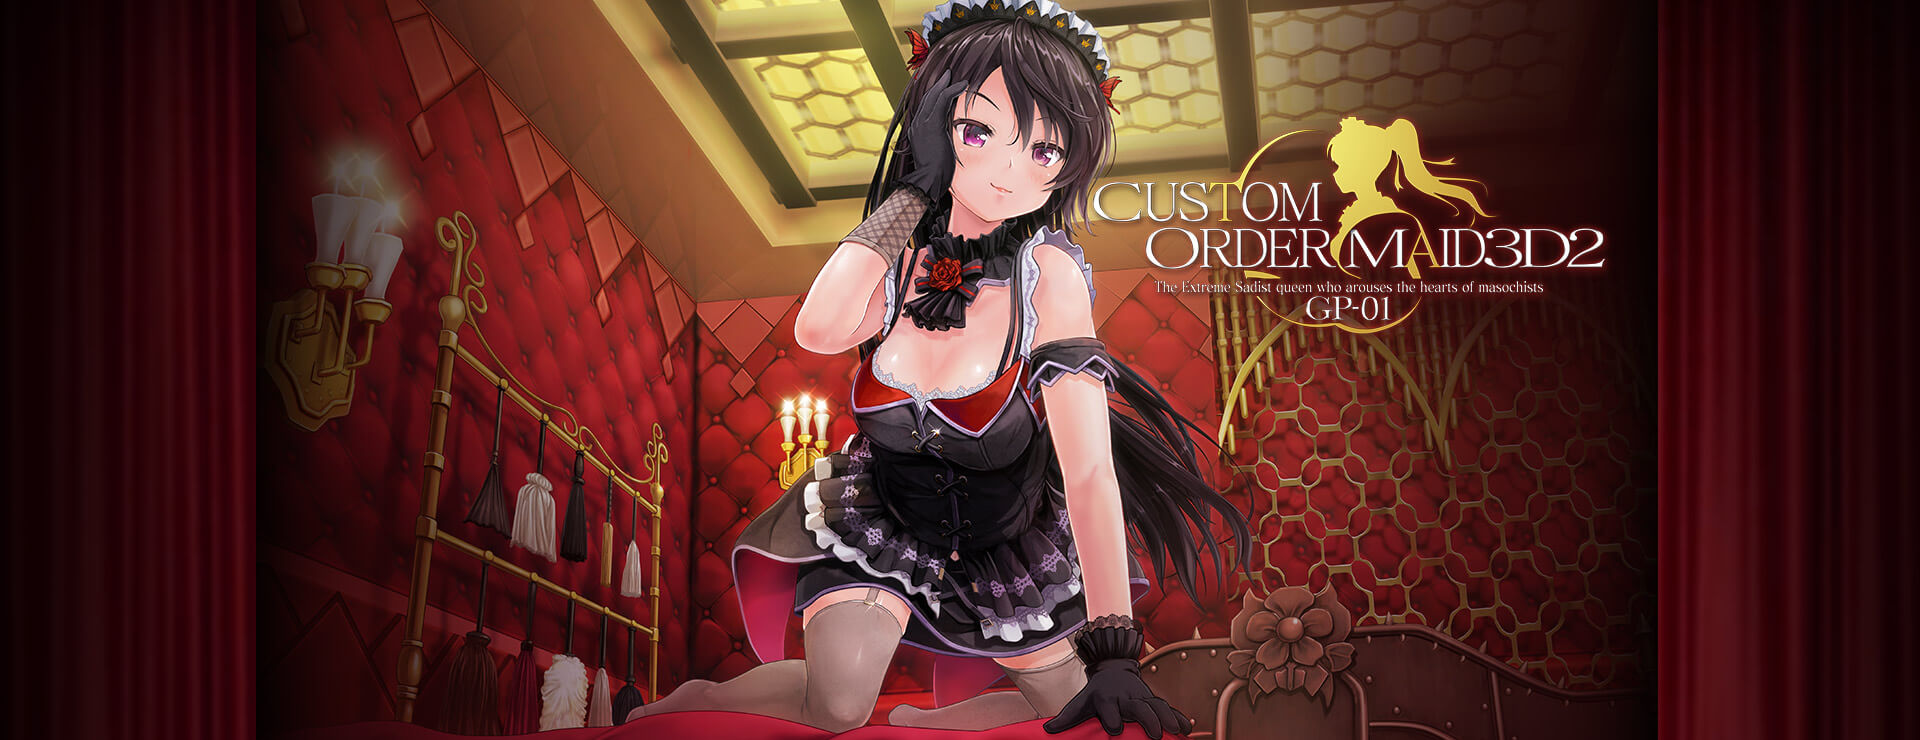 Custom Order Maid 3D2: Extreme Sadist Queen GP01 DLC - Simulation Game